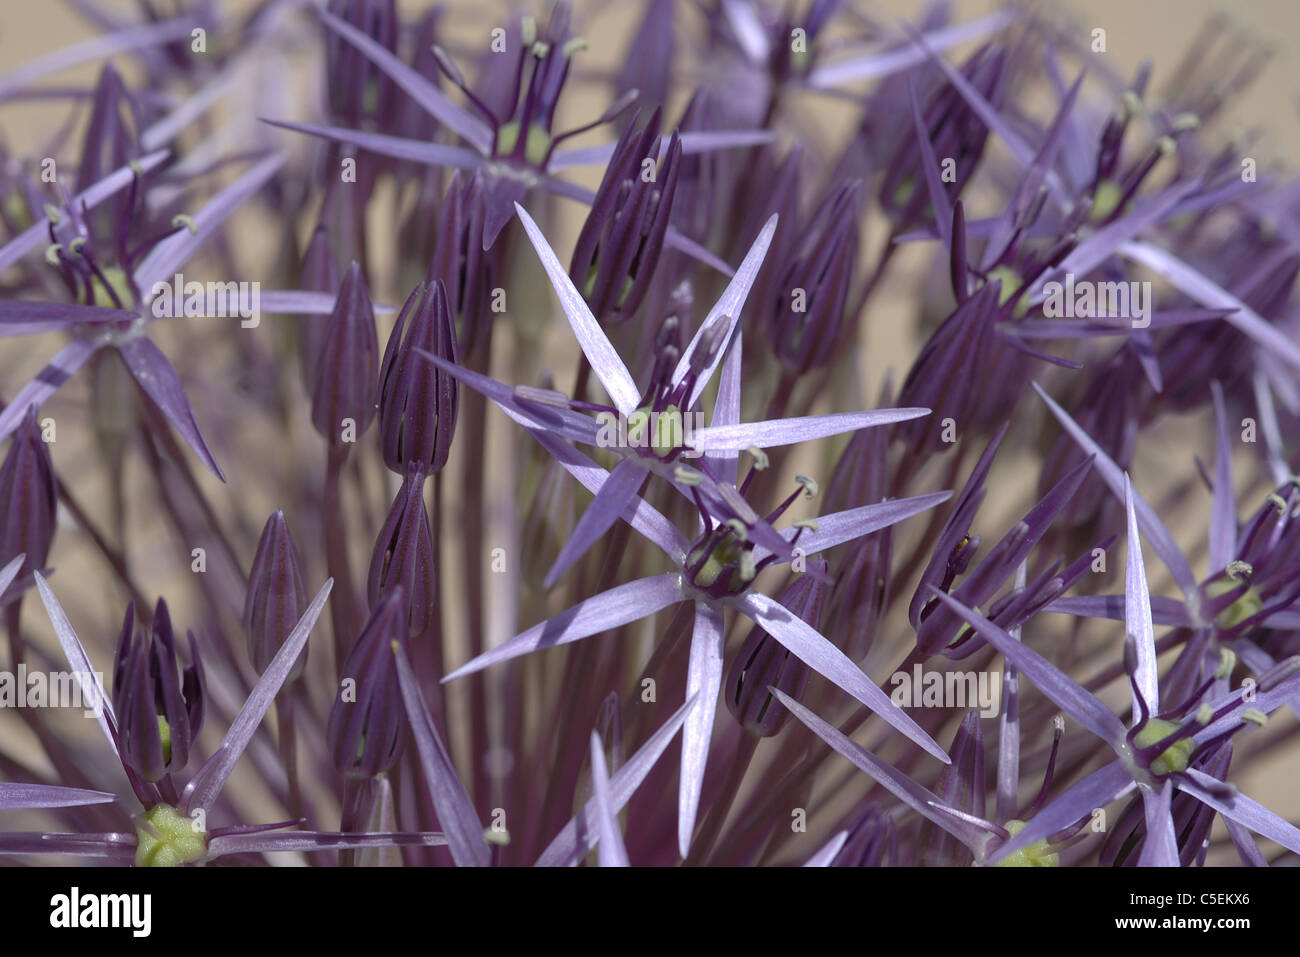 Purple Alium taken in country garden. UK. Macro image. Stock Photo